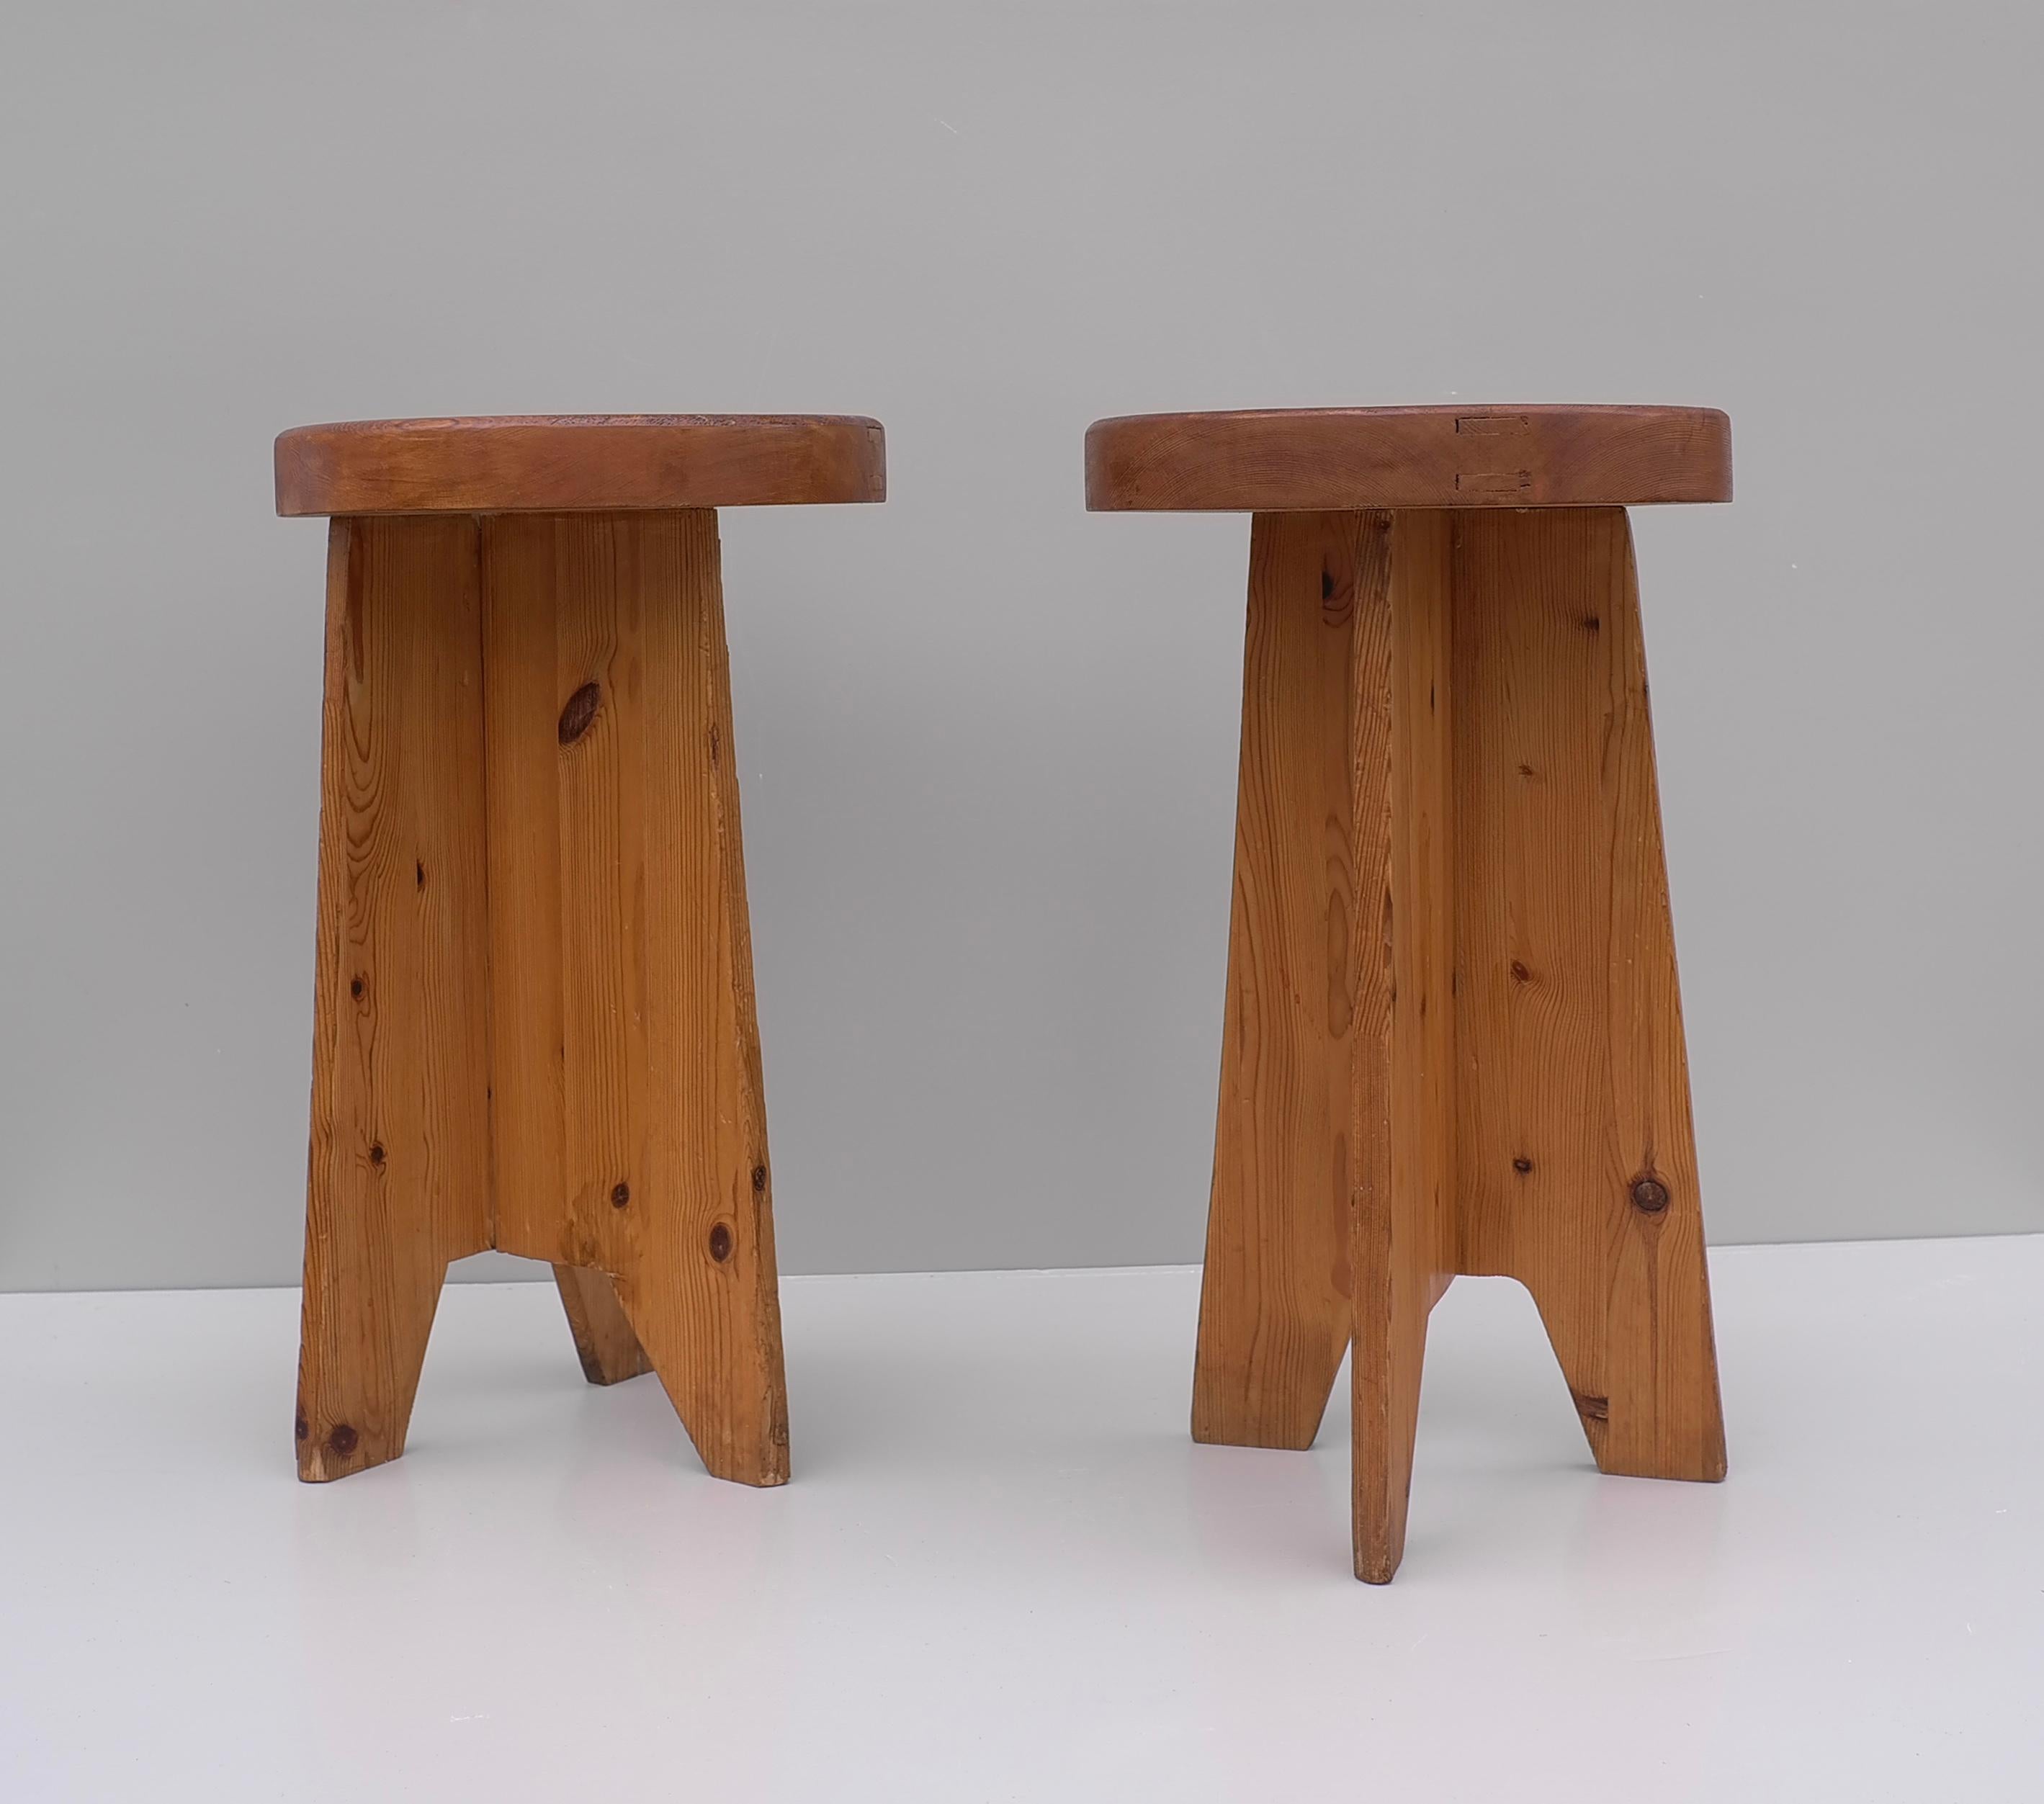 Pair of Monumental Mid-Century Modern Pine Stools, Scandinavia 1940's For Sale 10